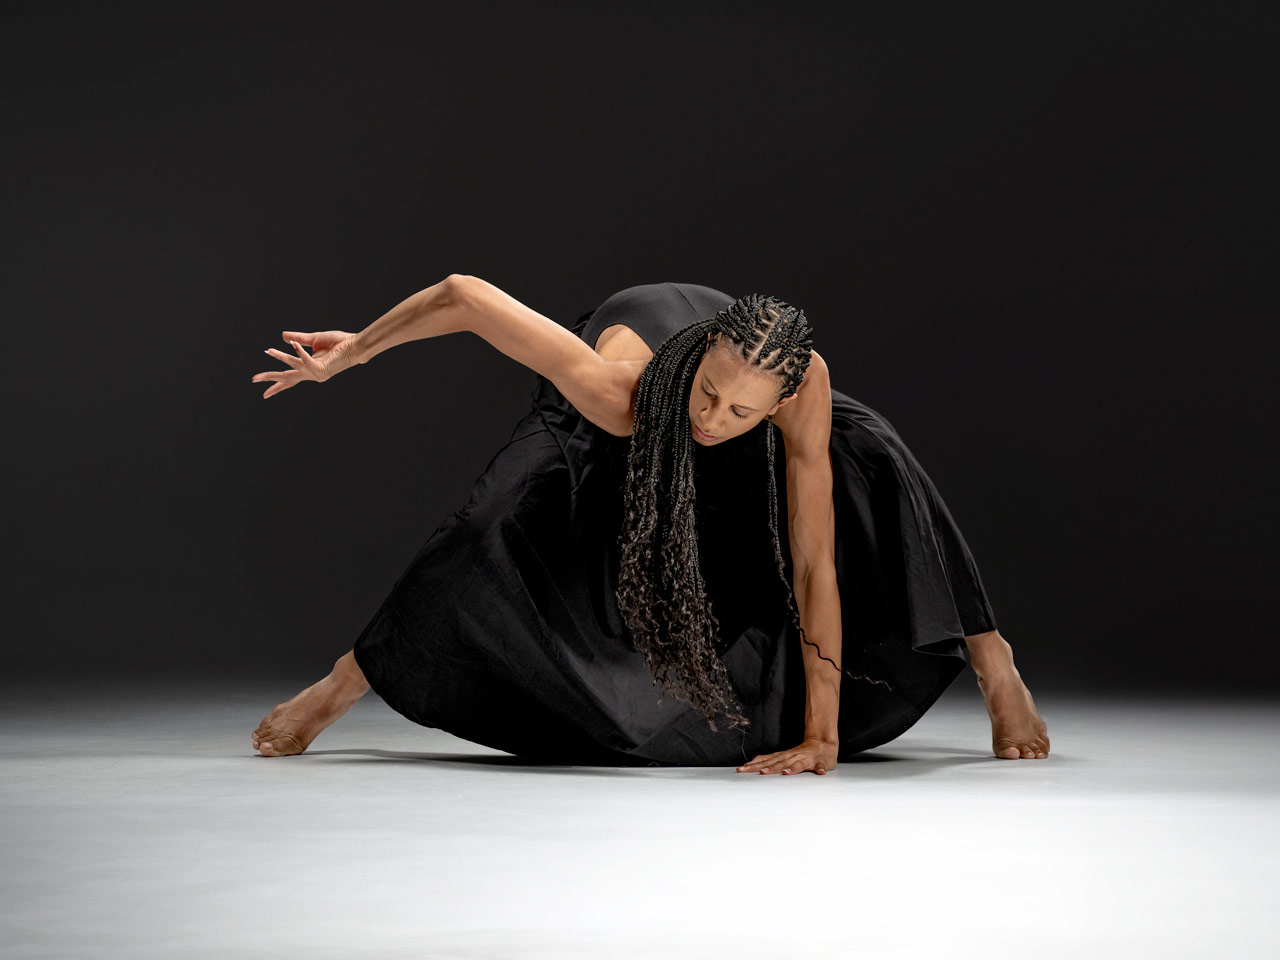 push/FOLD dancer Ashley Morton creating a shapely pose in a black dress at Cobalt Studios in Portland, Oregon | Photography: Samuel Hobbs